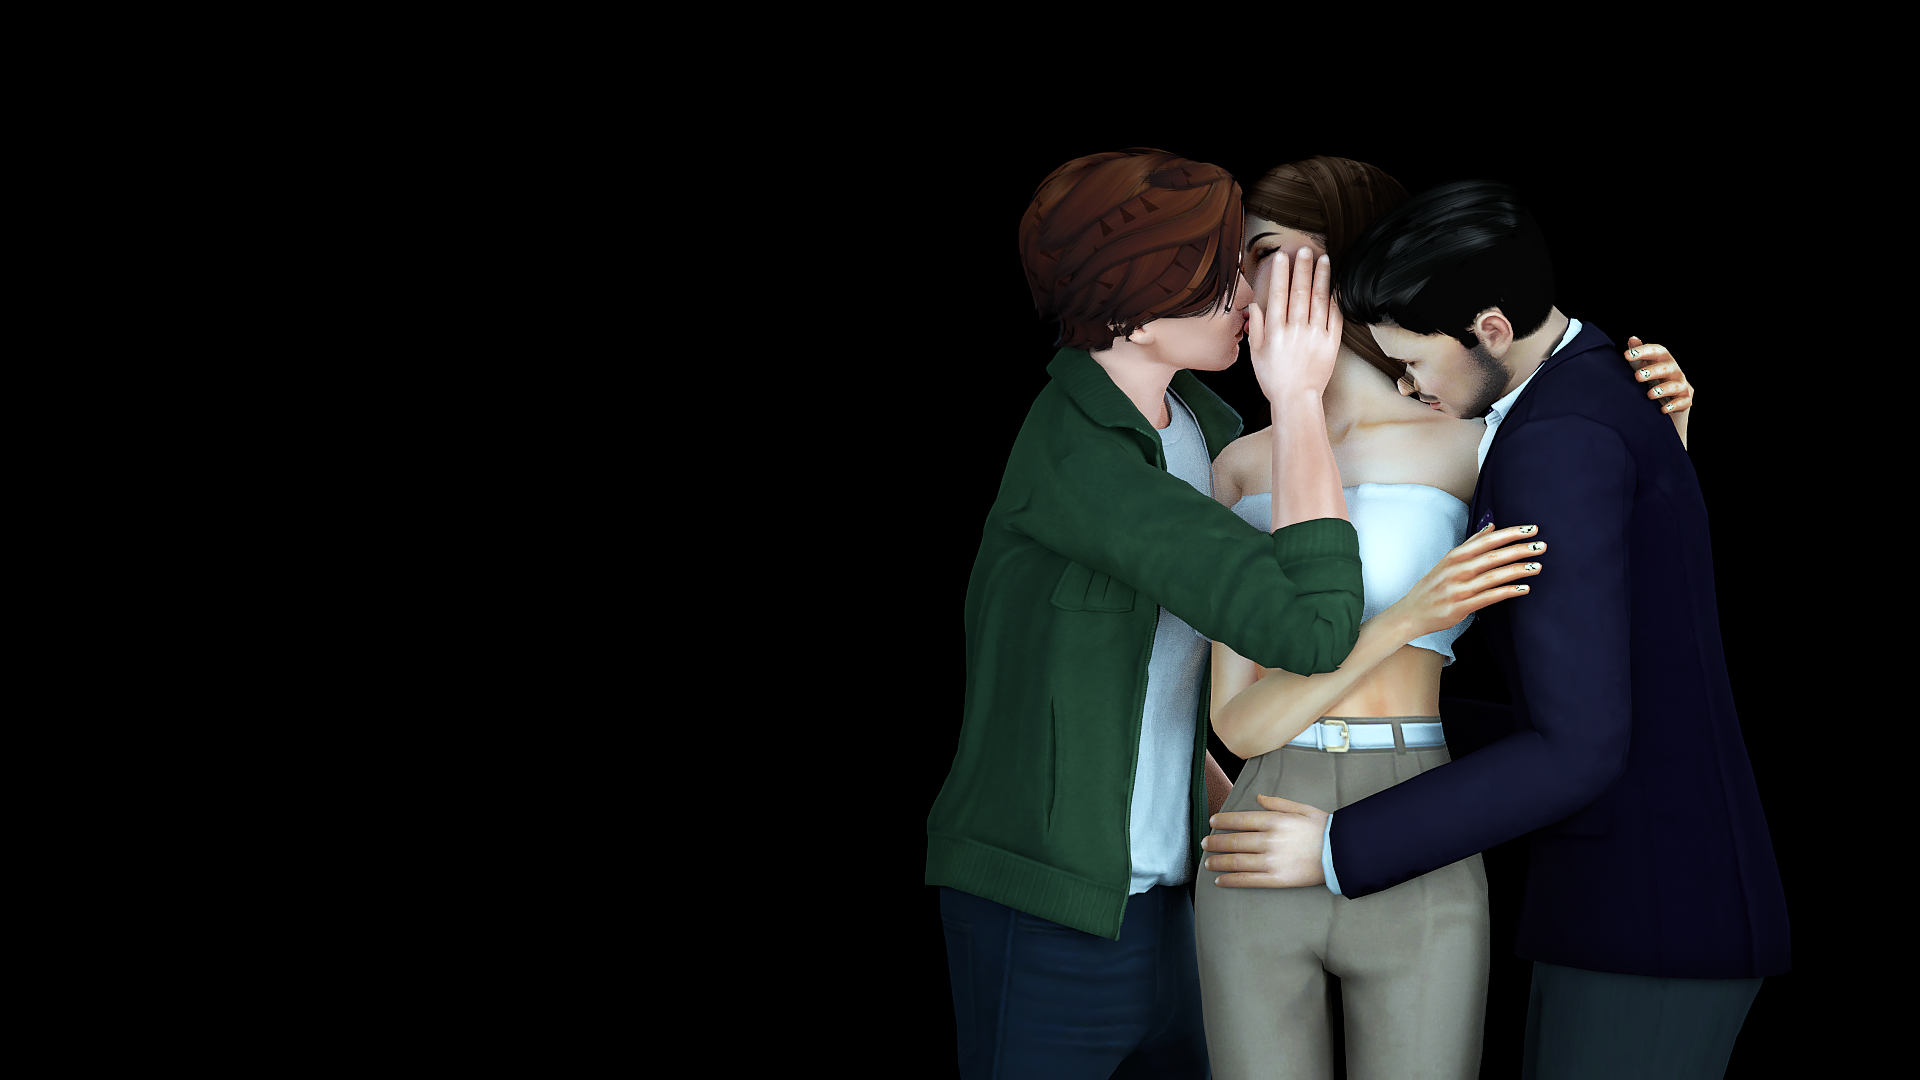 The sims 4 threesome kiss mod